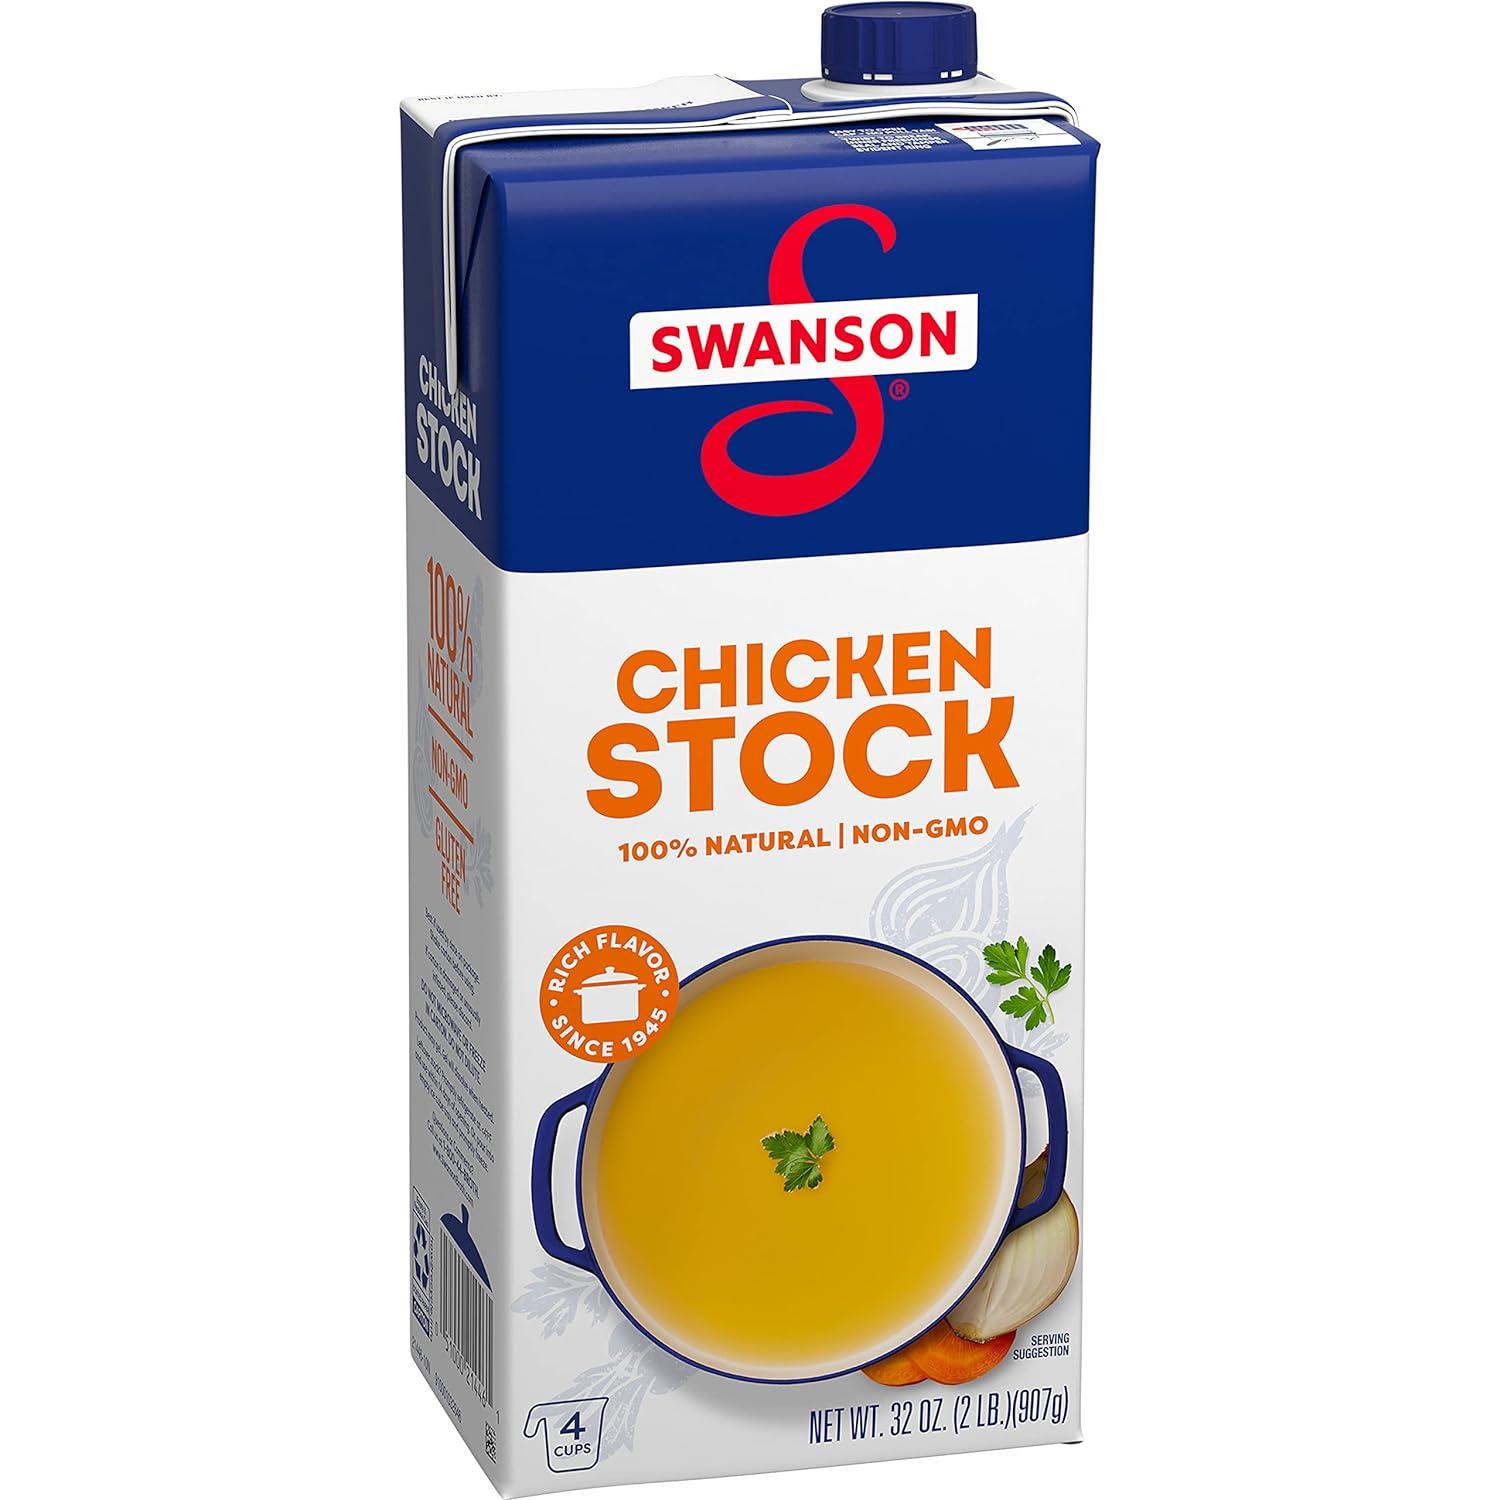 Swanson Natural Gluten-Free Chicken Stock for $1.87